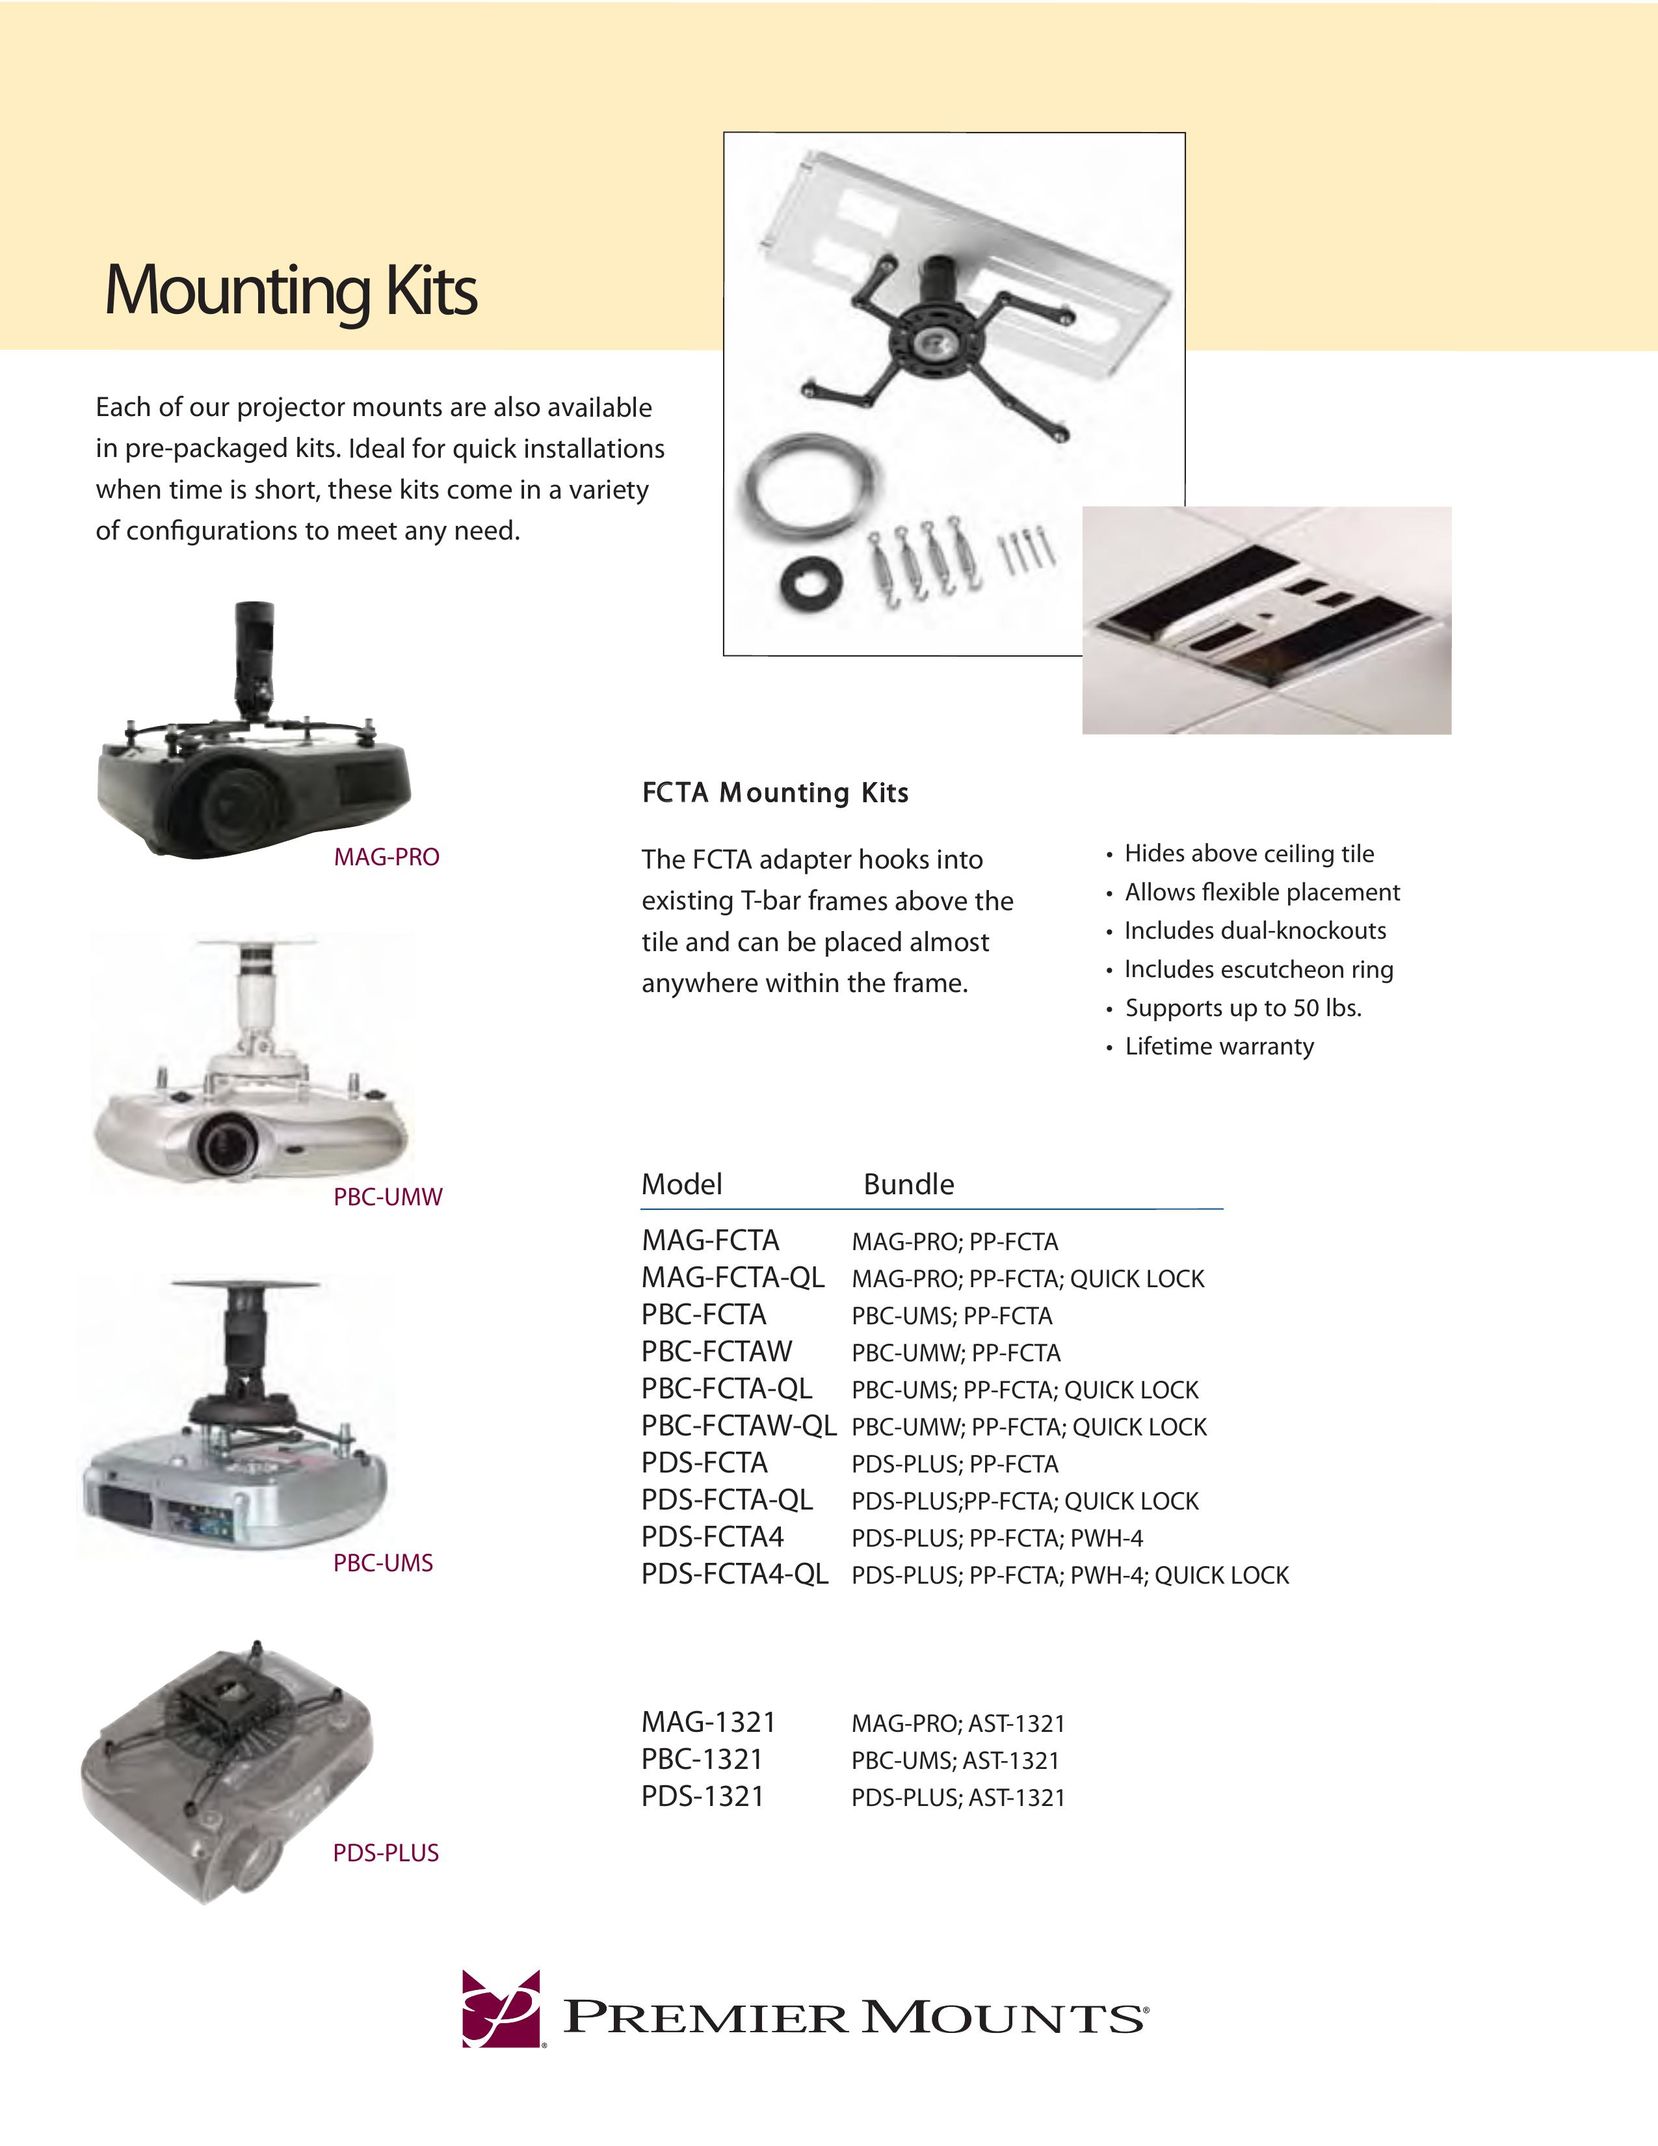 Premier Mounts PDS-1321 Indoor Furnishings User Manual